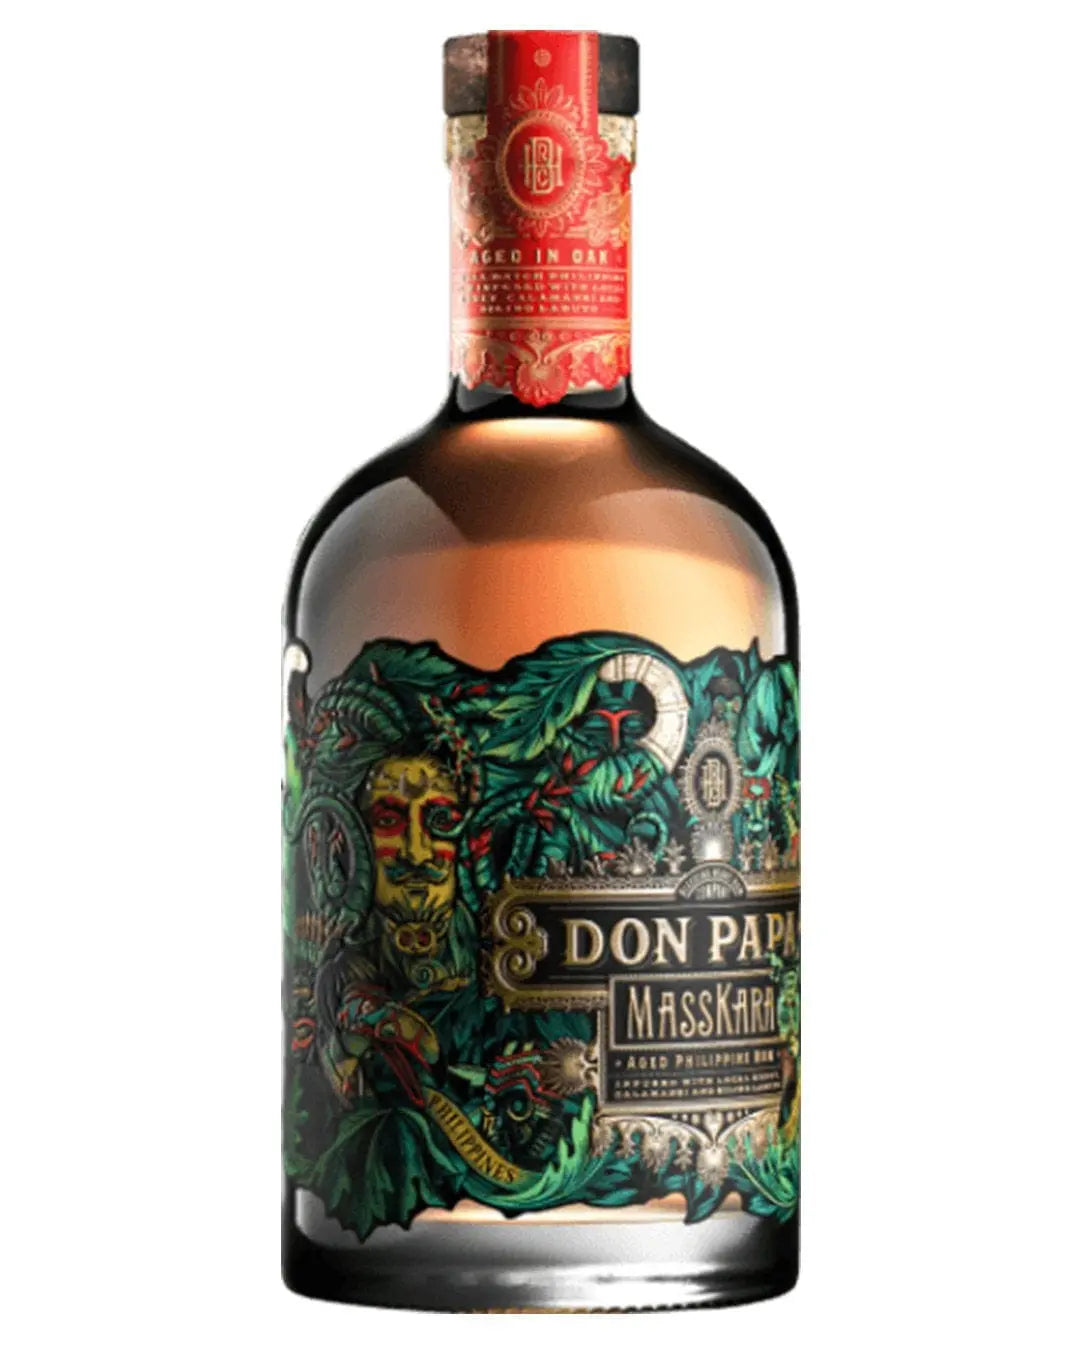 Limited Edition Don Papa Masskara Rum, 70 cl Rum